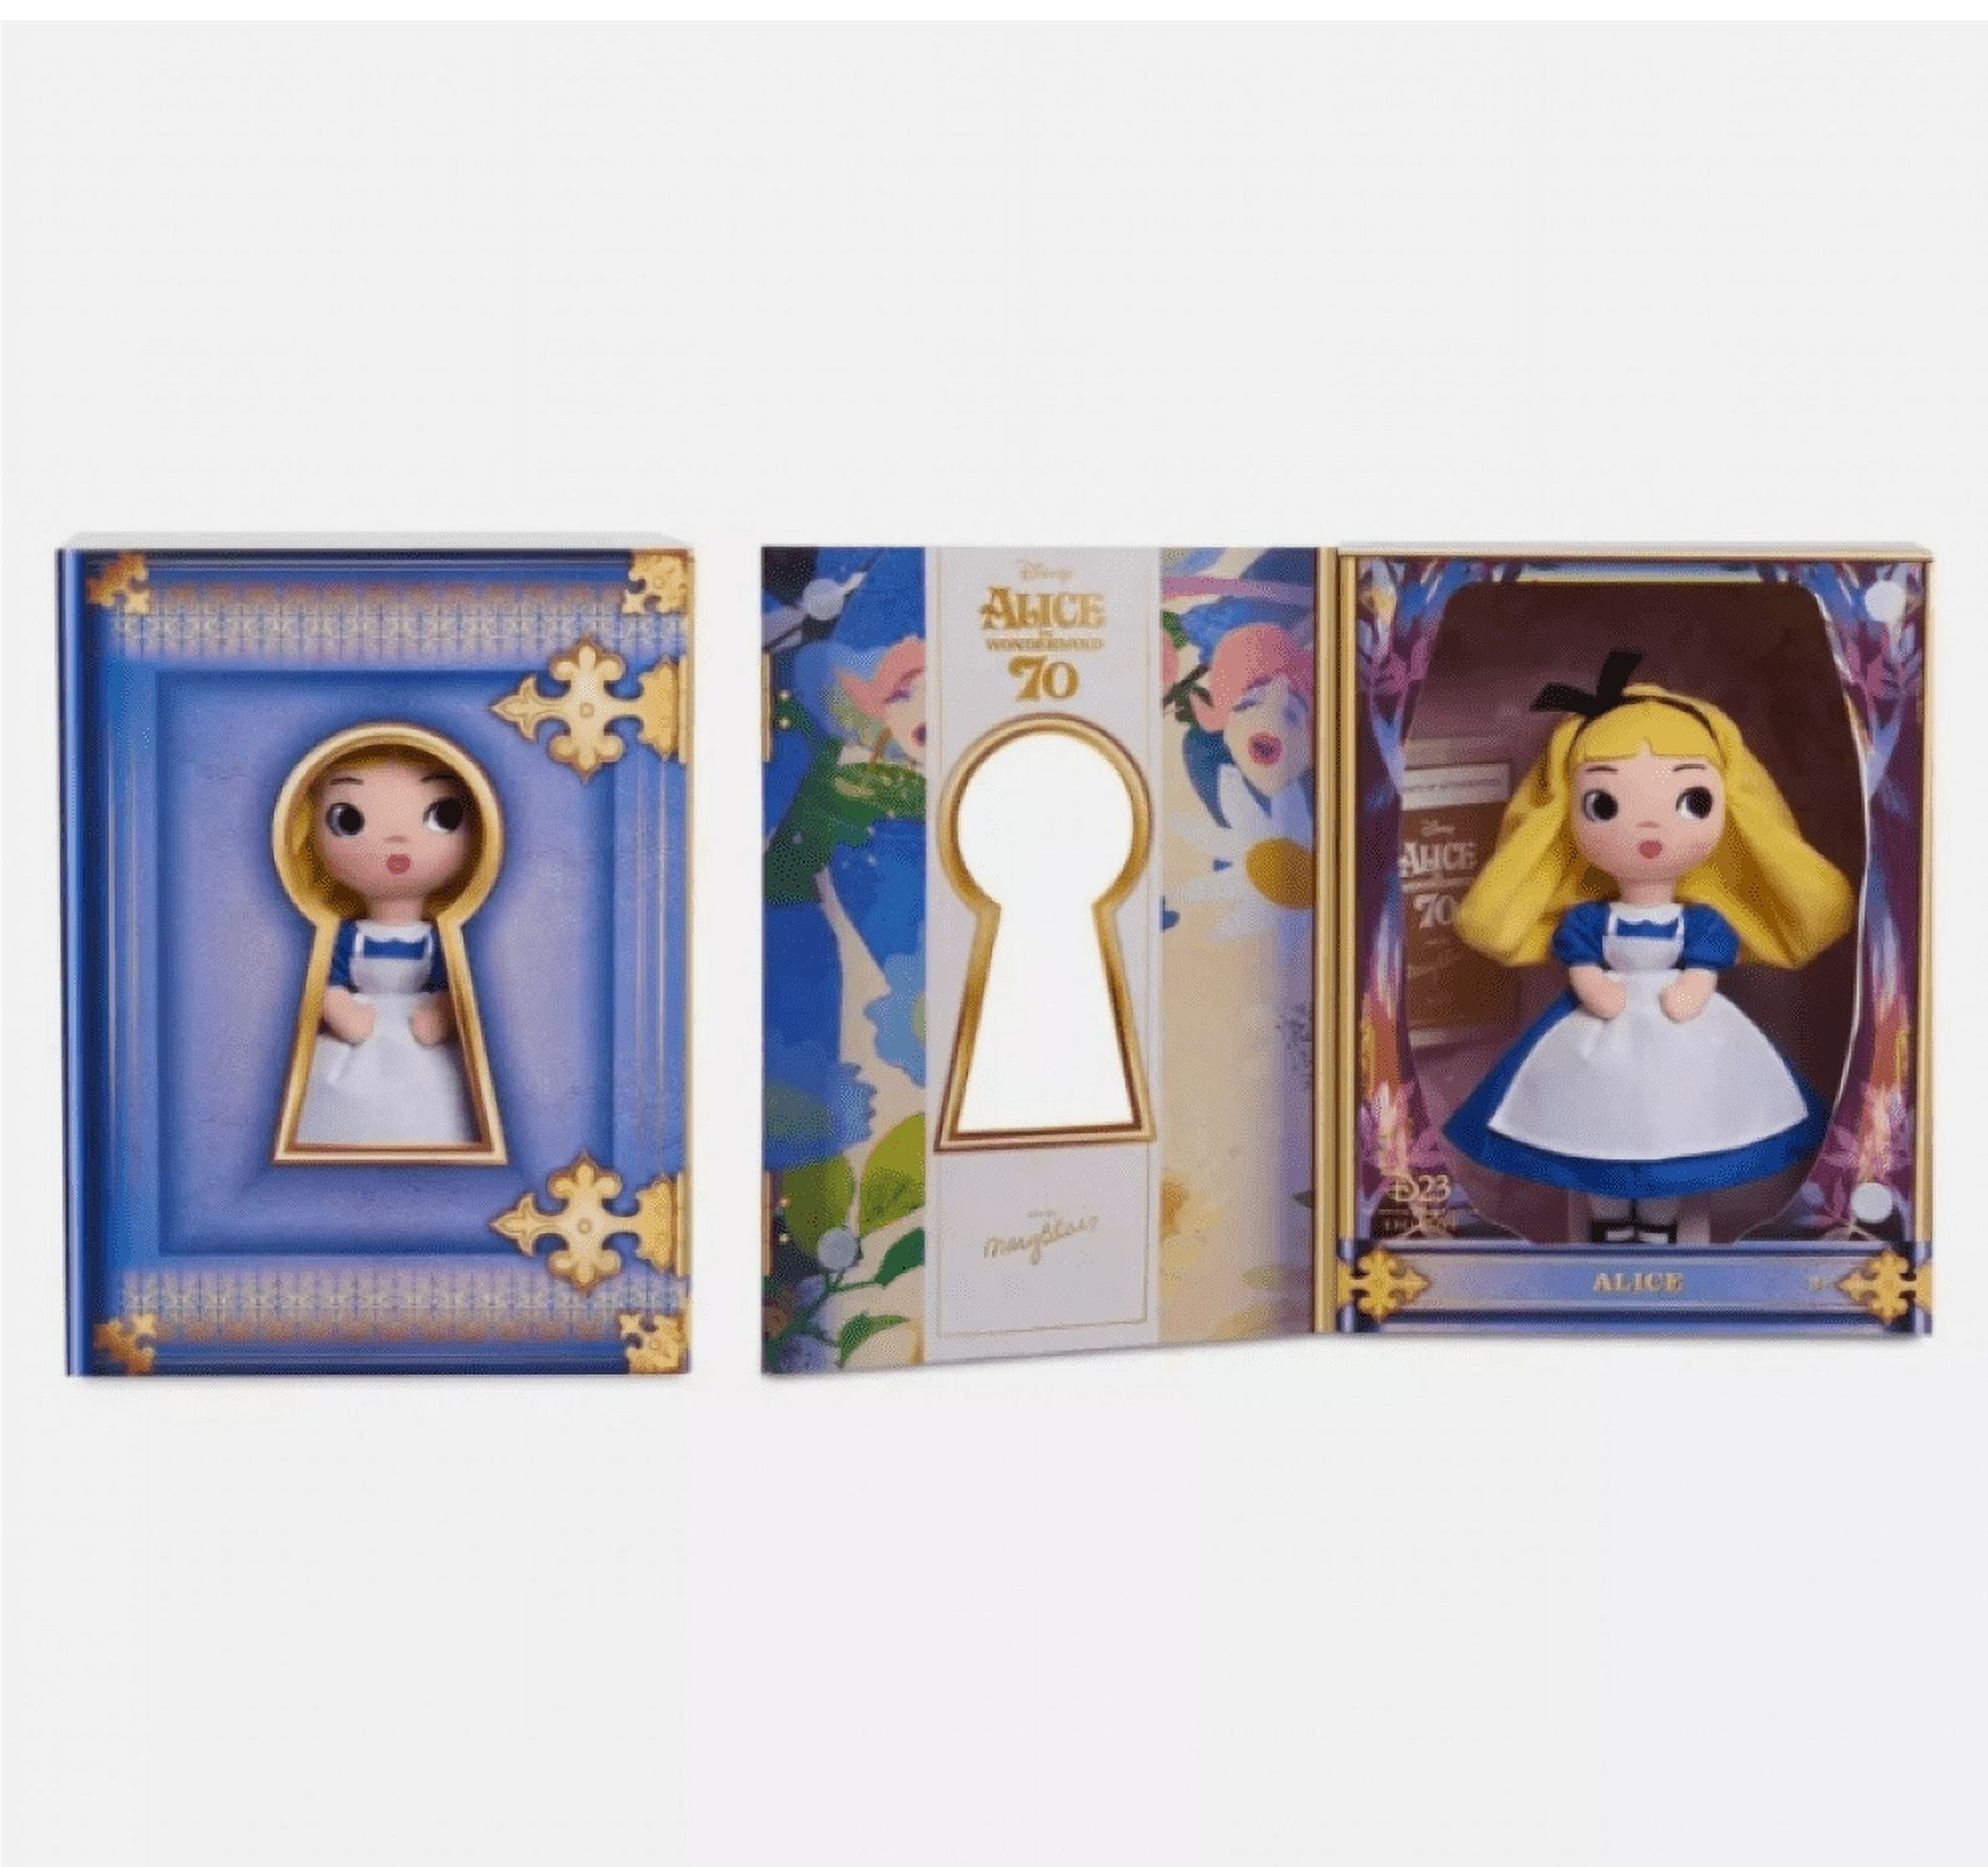 Disney Alice in Wonderland 70th Anniversary Alice in Wonderland Exclusive  11 Plush Set Just Play - ToyWiz